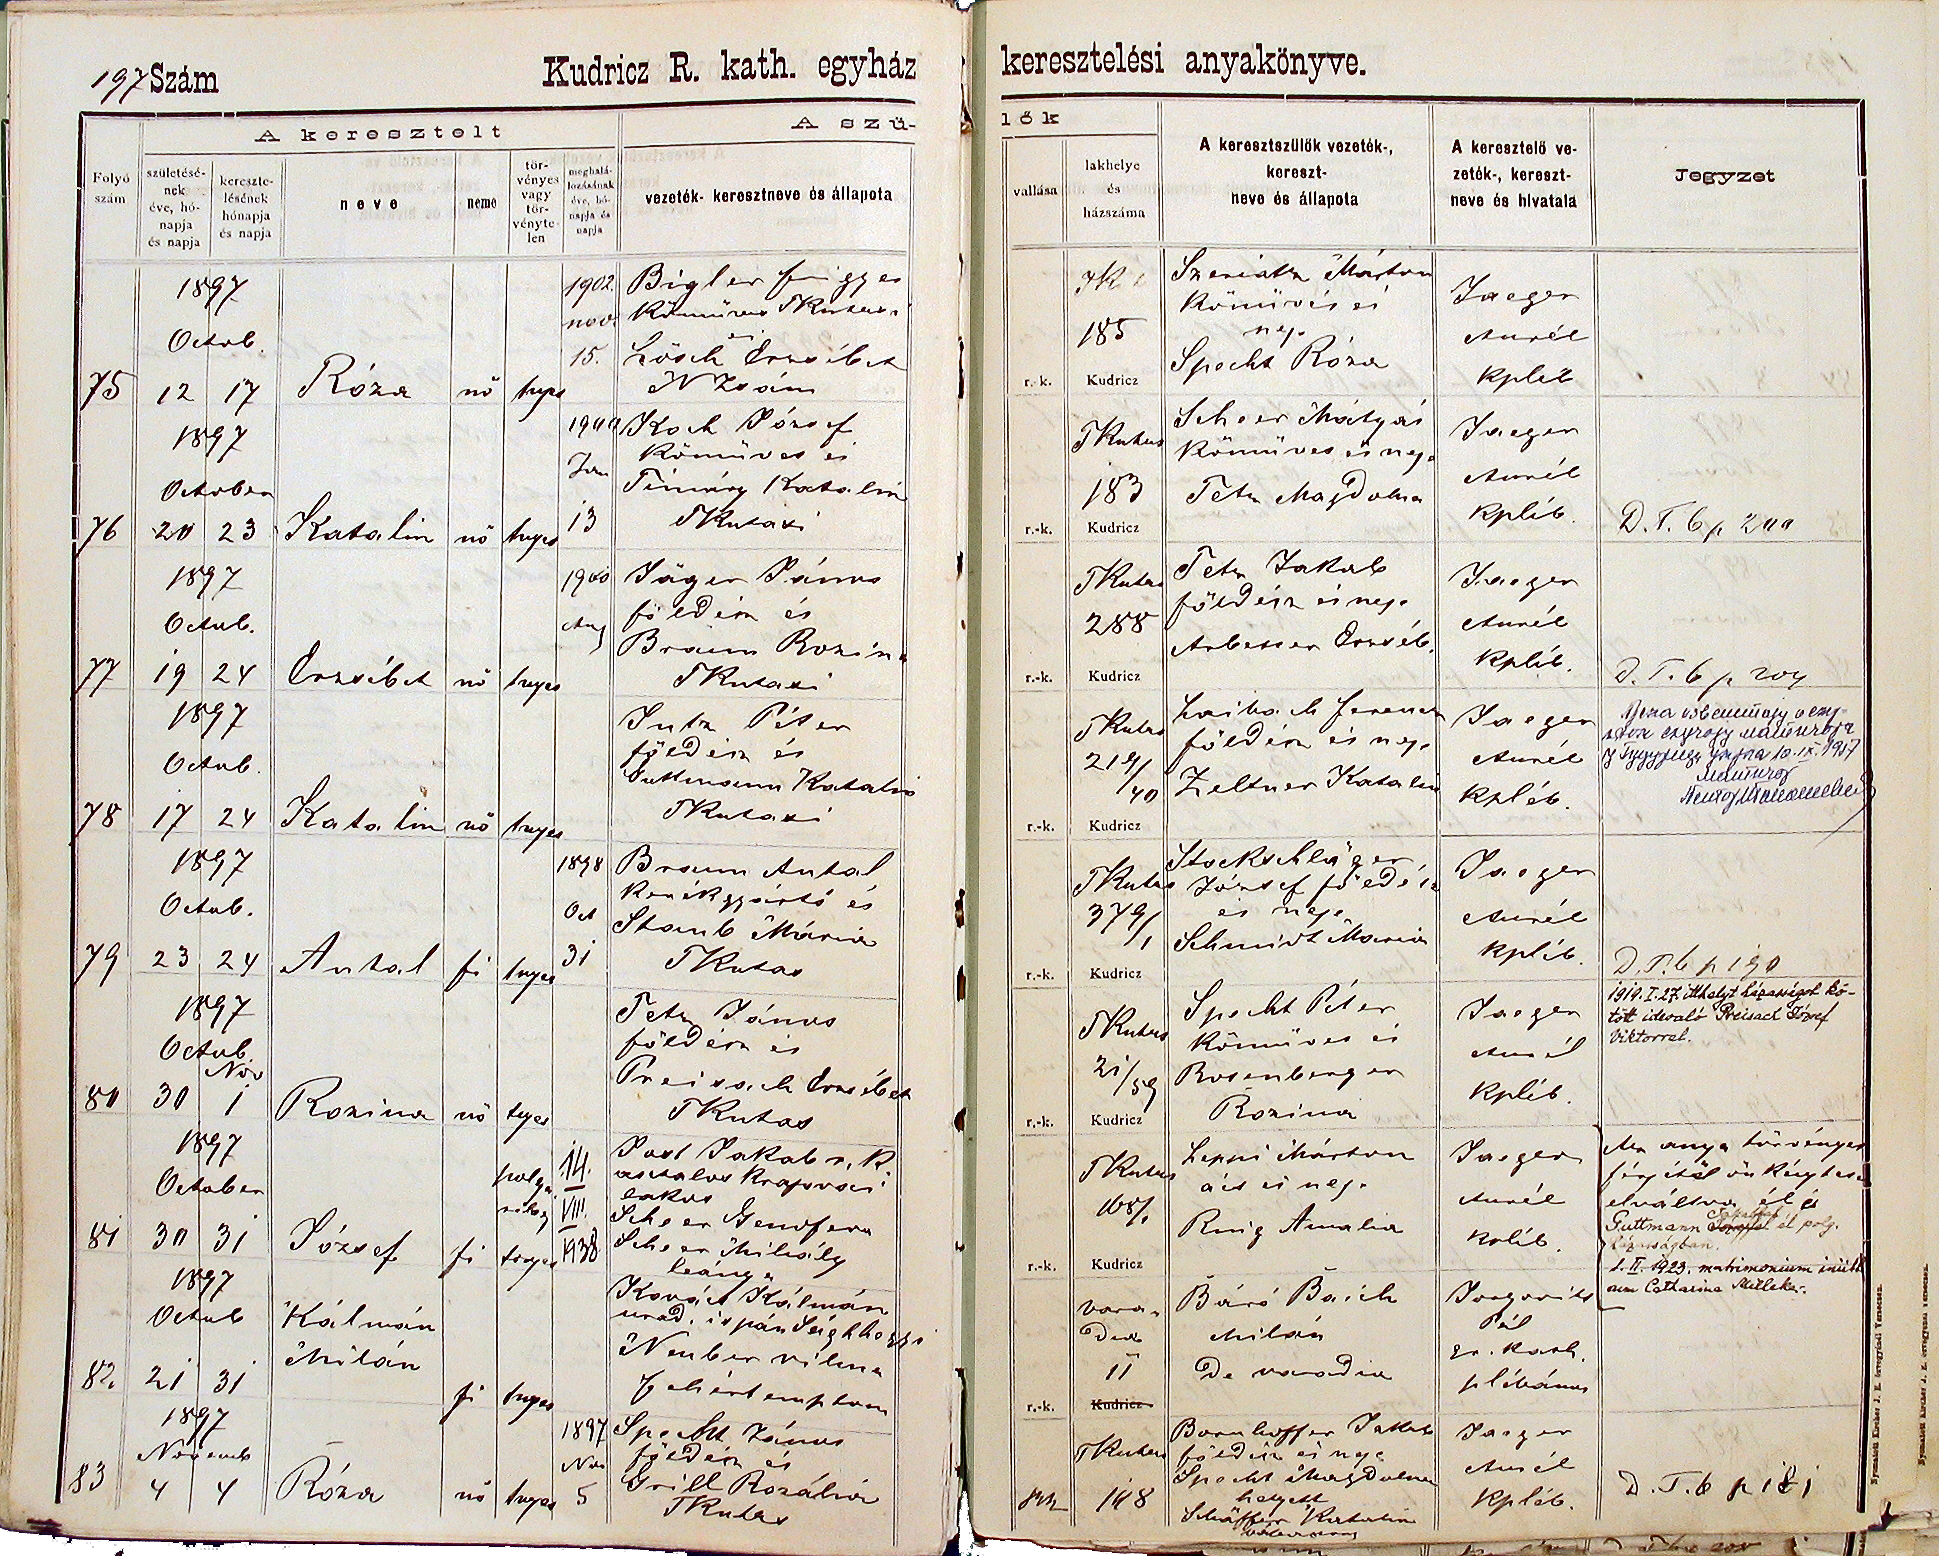 images/church_records/BIRTHS/1884-1899B/1897/197